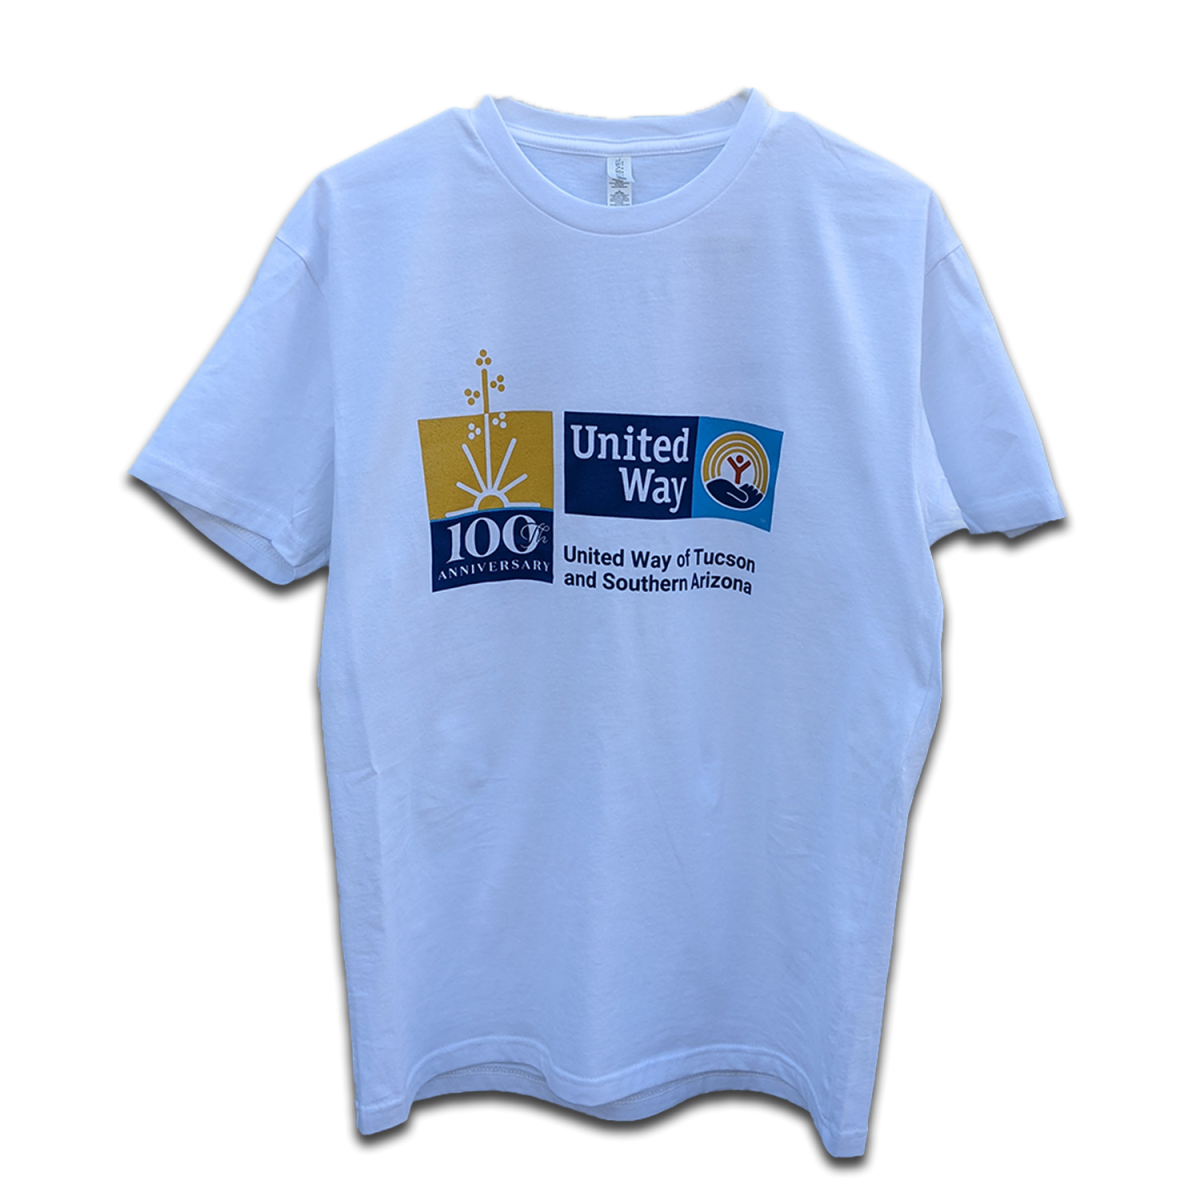 union-made-shirts-united-way